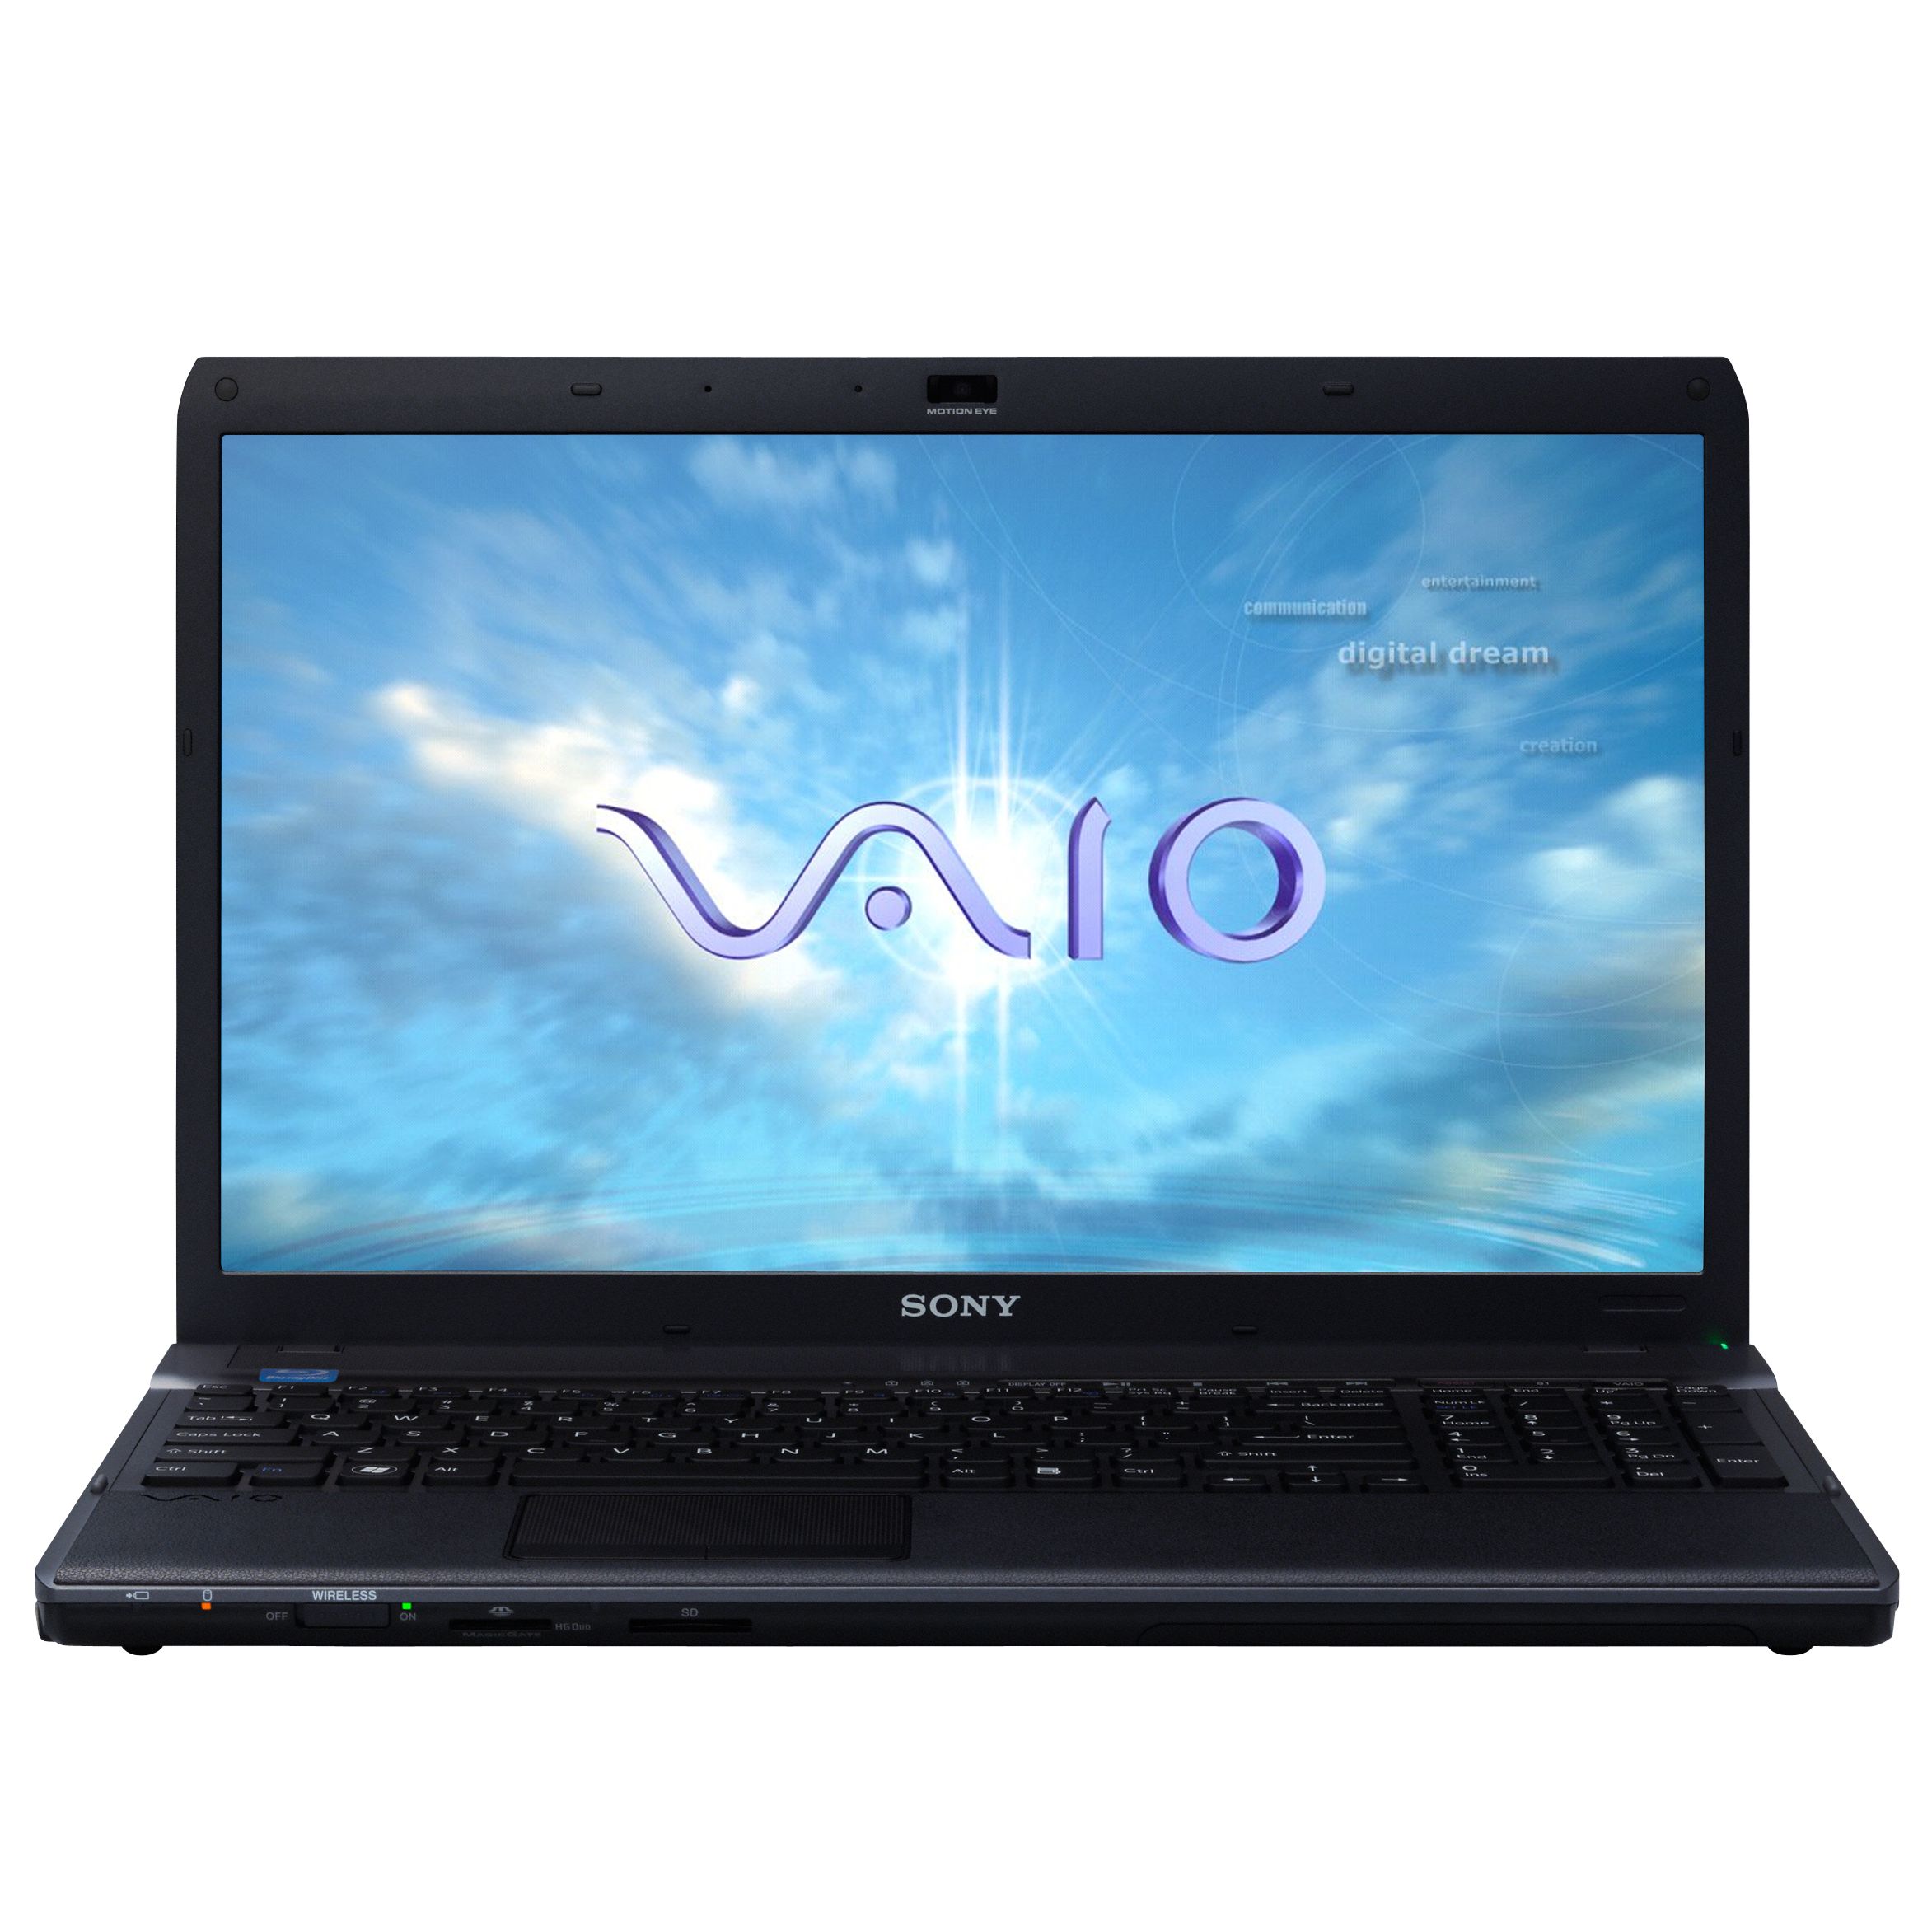 Sony Vaio VPC-F12M0E/B17 Laptop, Intel Core i7, 500GB, 1.73GHz, 4GB RAM with 16.4 Inch Display at John Lewis